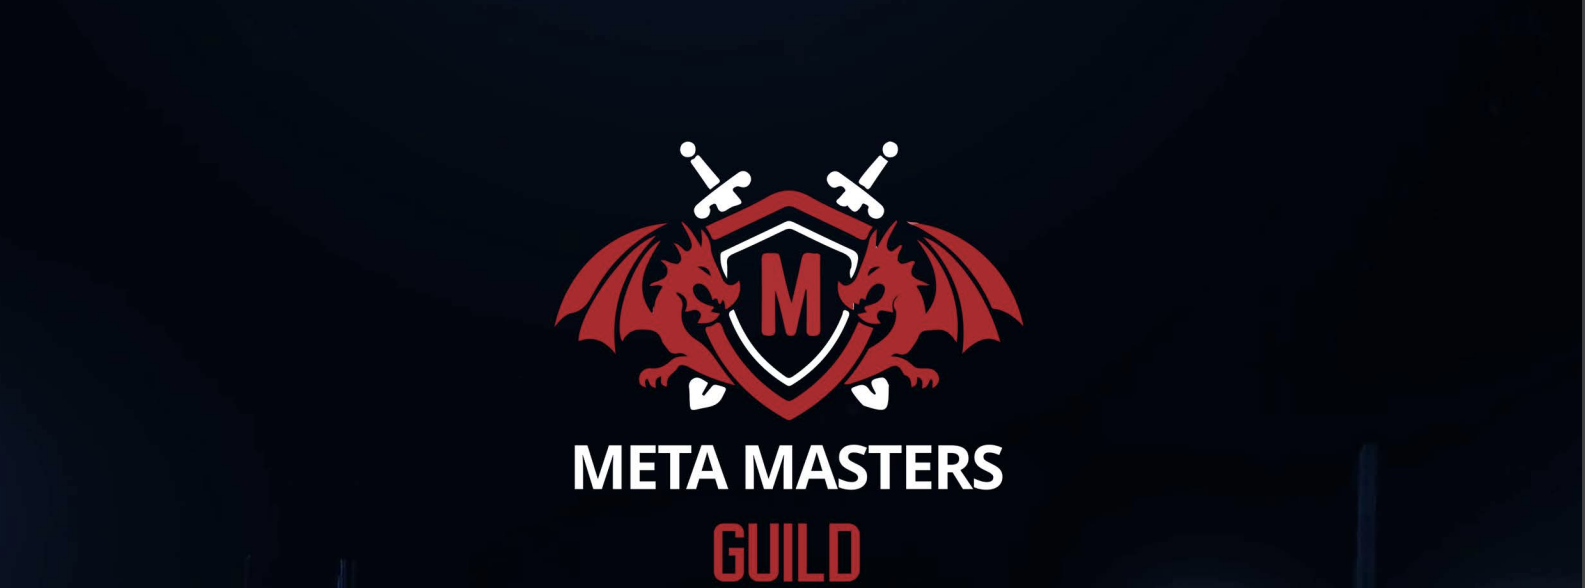 Meta Masters Guild 迪拜加密货币